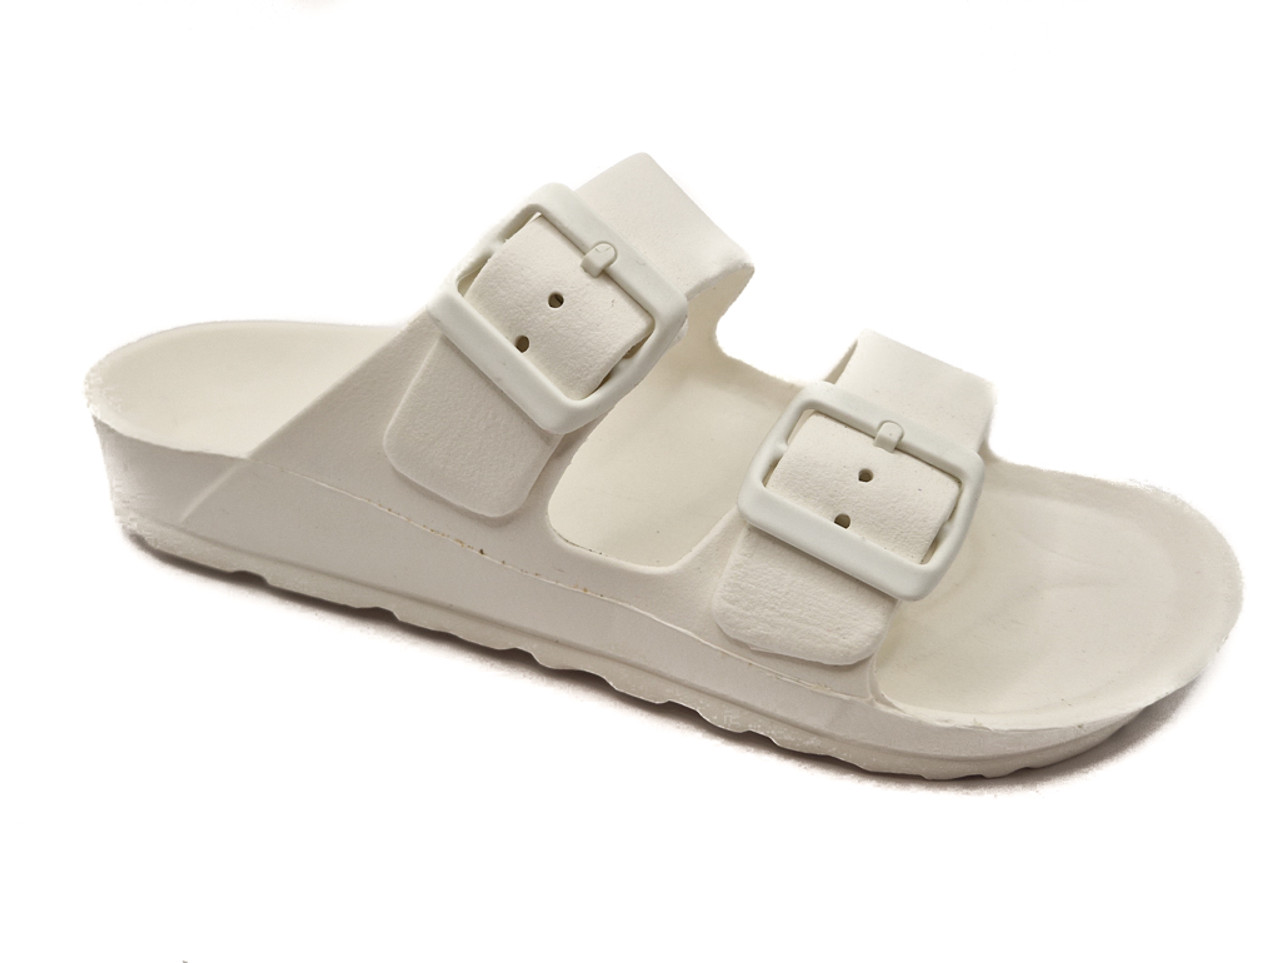 HHZY Summer Sandals for Women, Comfort Platform Leather Sandals,  Embroidered, Casual Summer Open Toe Sandals, Travel, Beach, Non-Slip Mules,  Shoes, Blue, UK 3/EU 35 : Amazon.de: Fashion